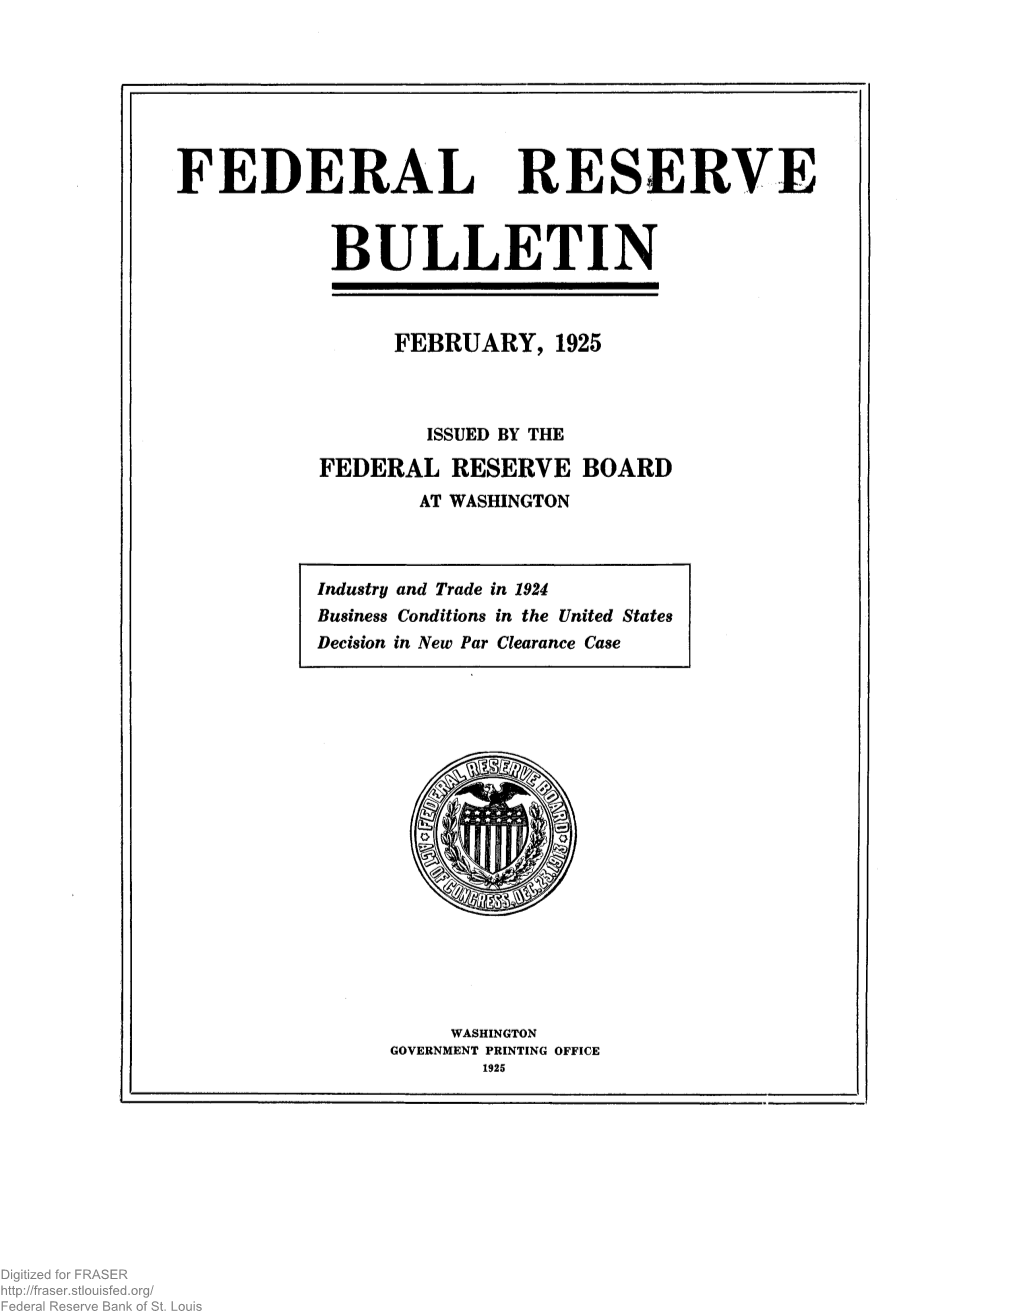 Federal Reserve Bulletin February 1925